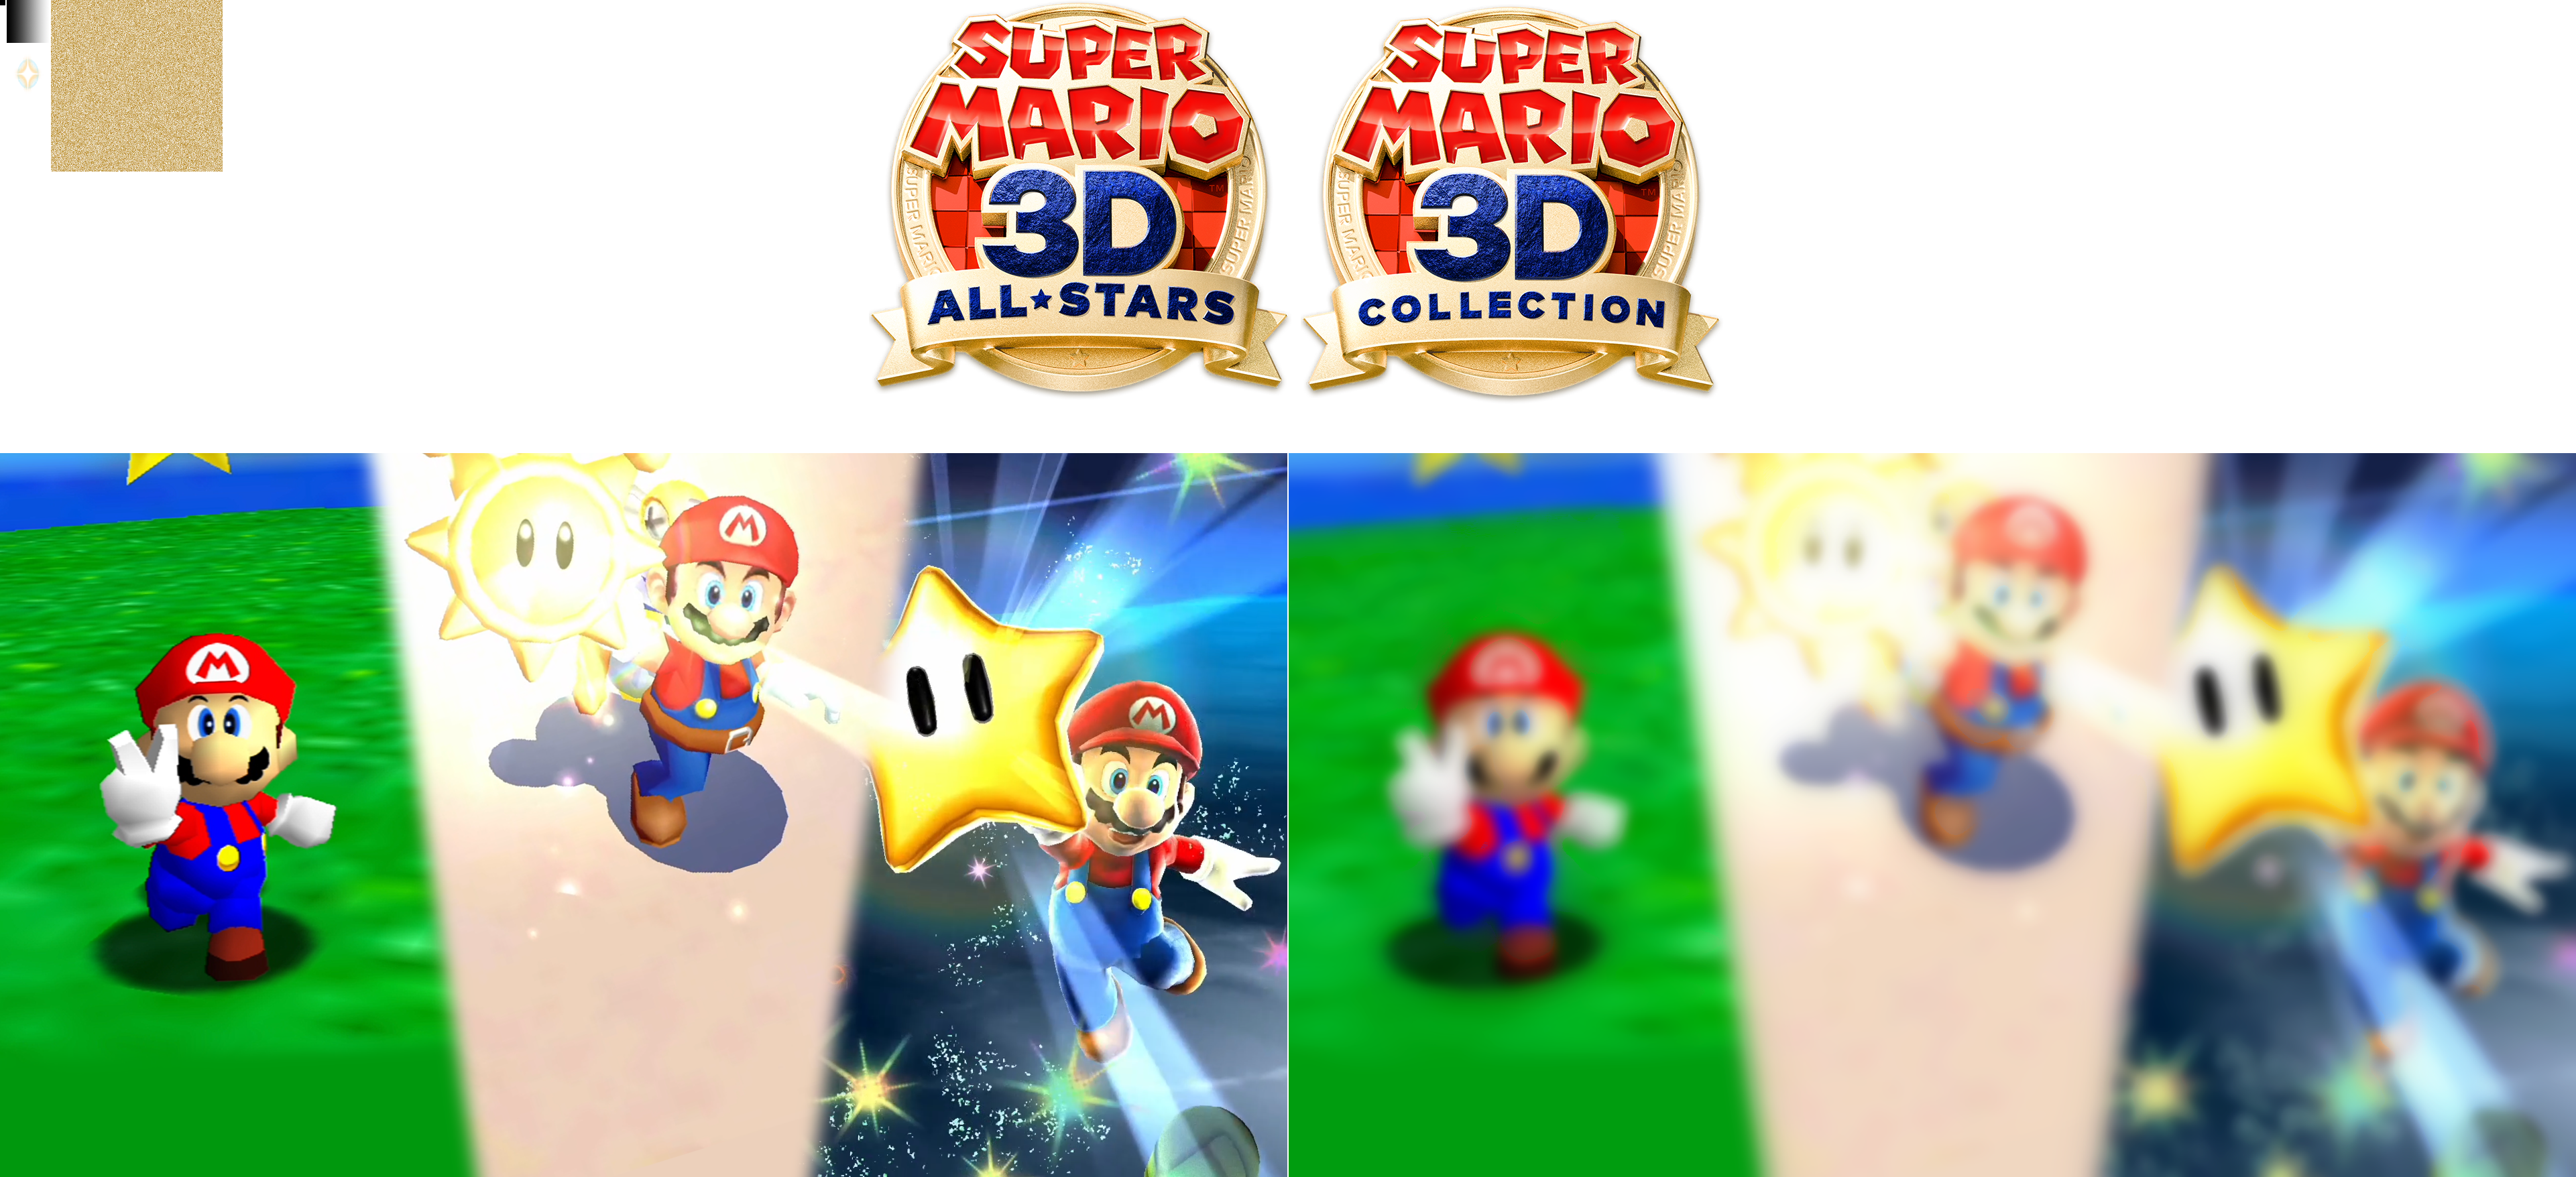 Super Mario 3D All-Stars - Title Screen